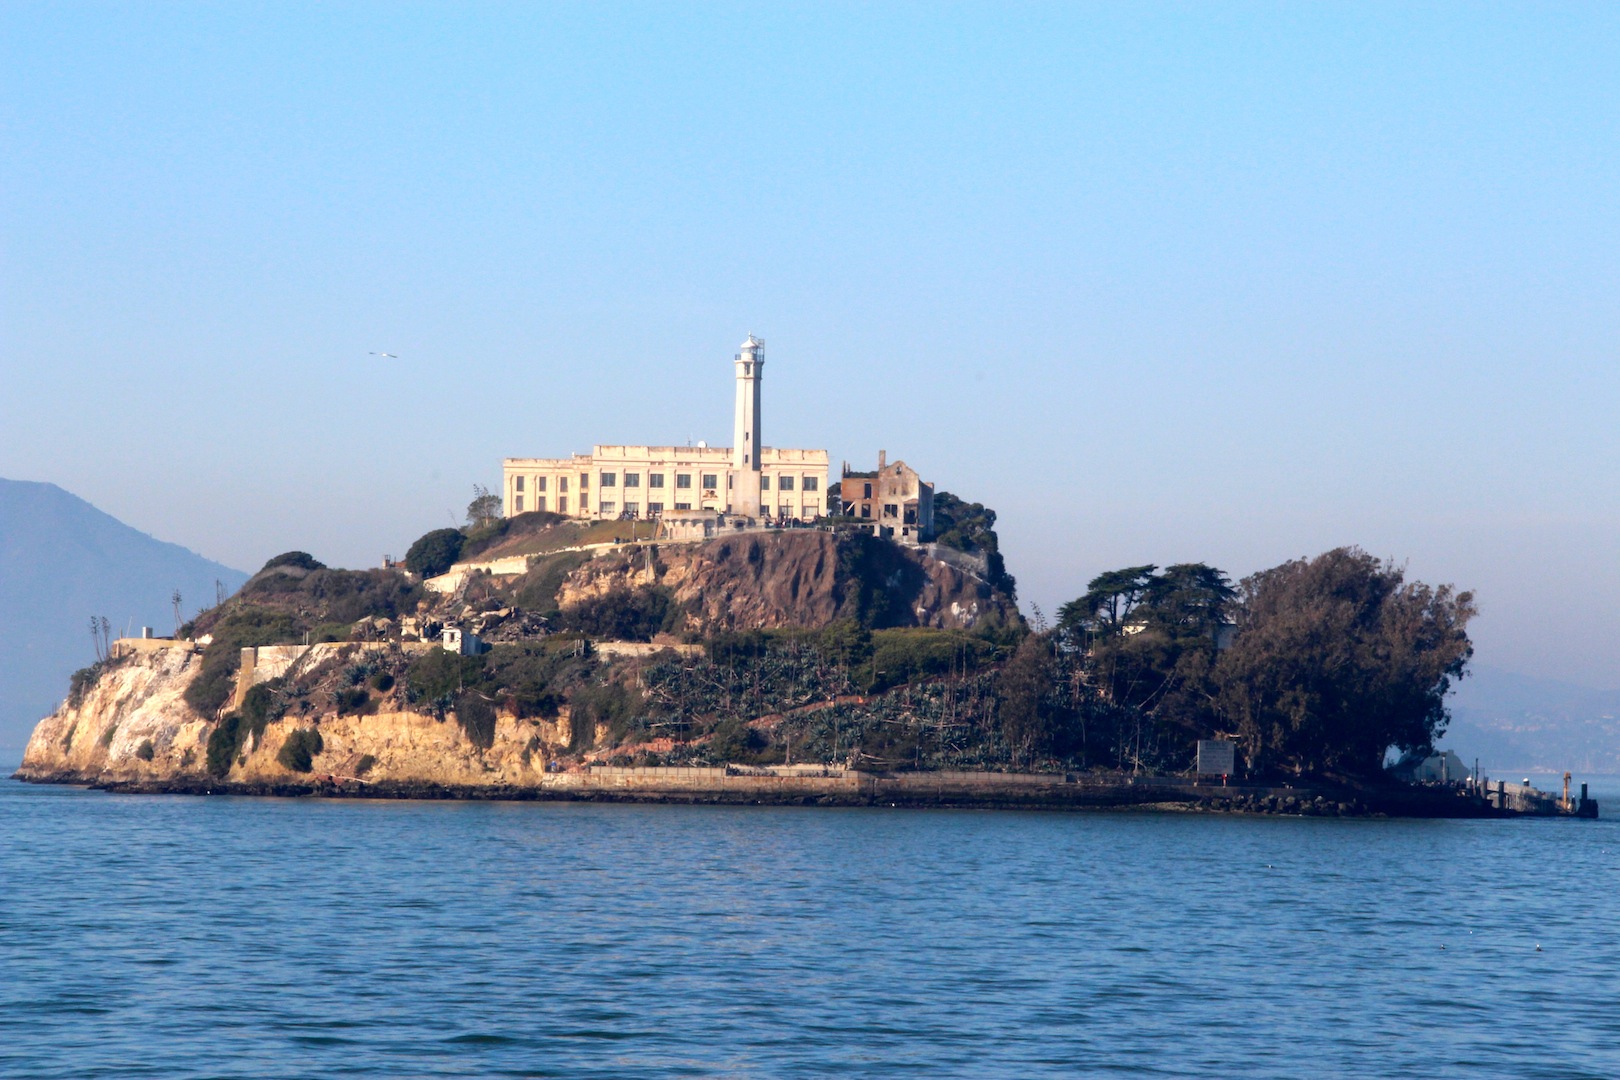 Texas A&M Prof Hoping To Unlock Secrets Of Alcatraz